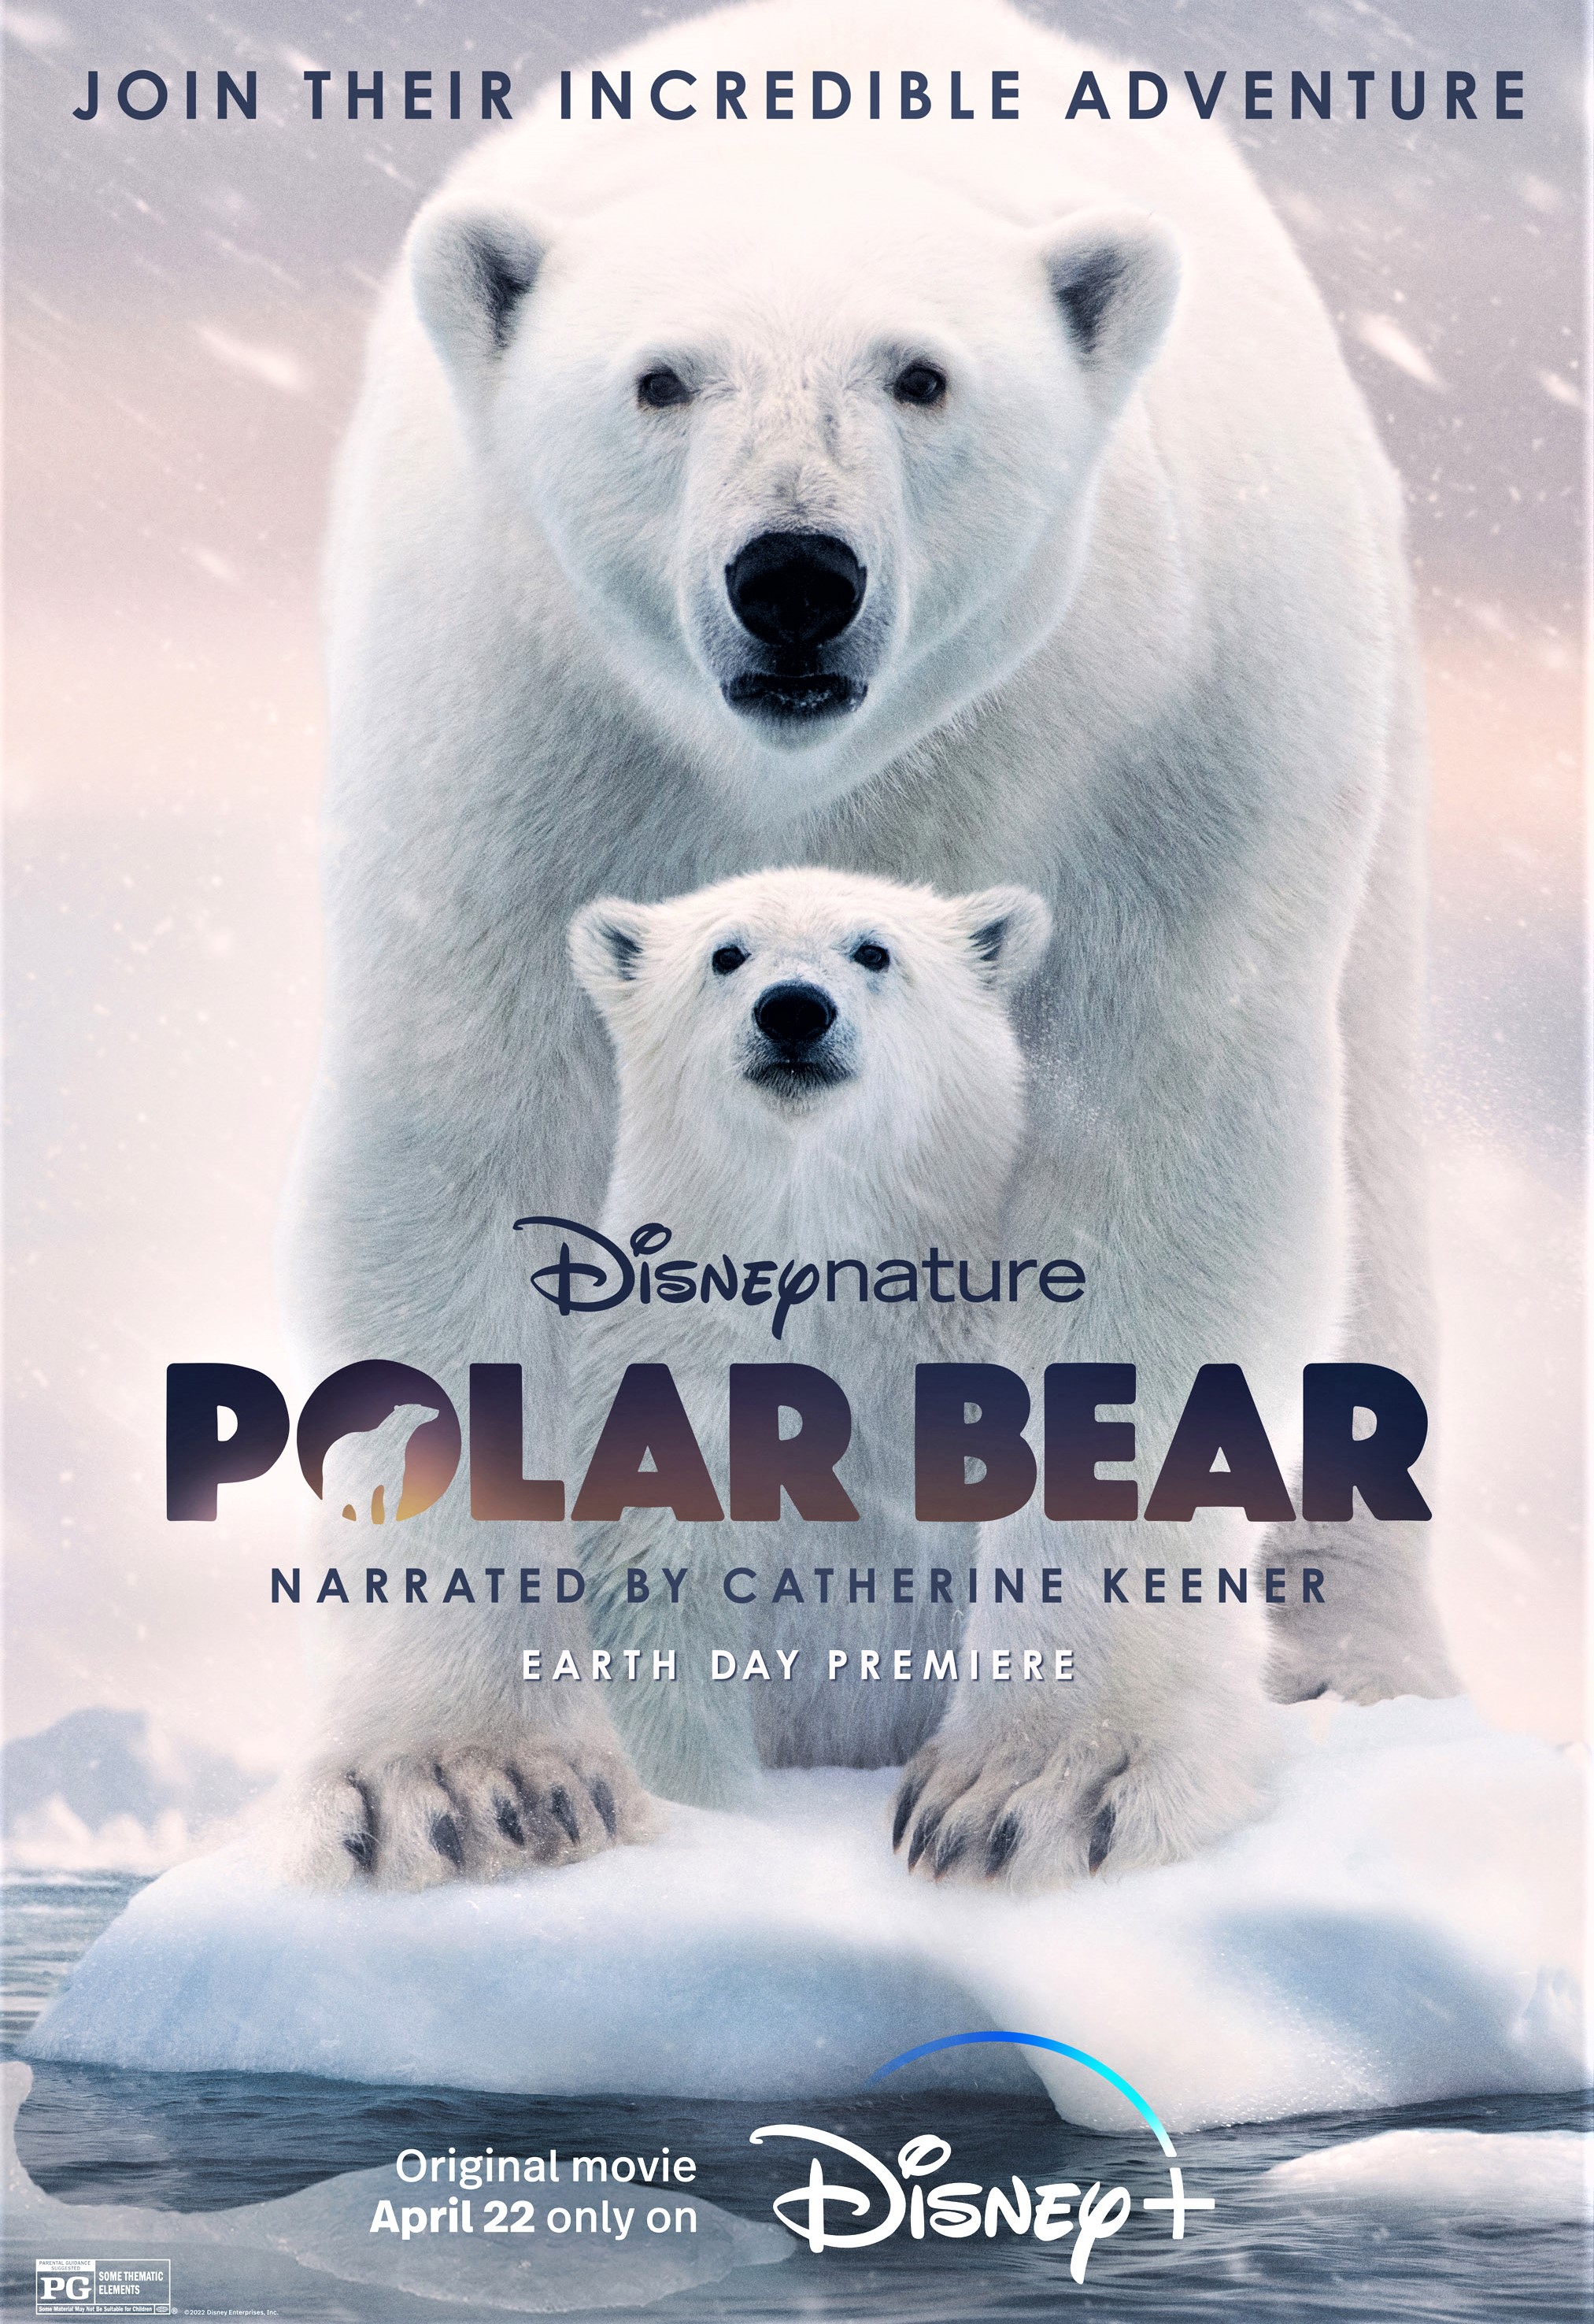 Polar Bear (film)